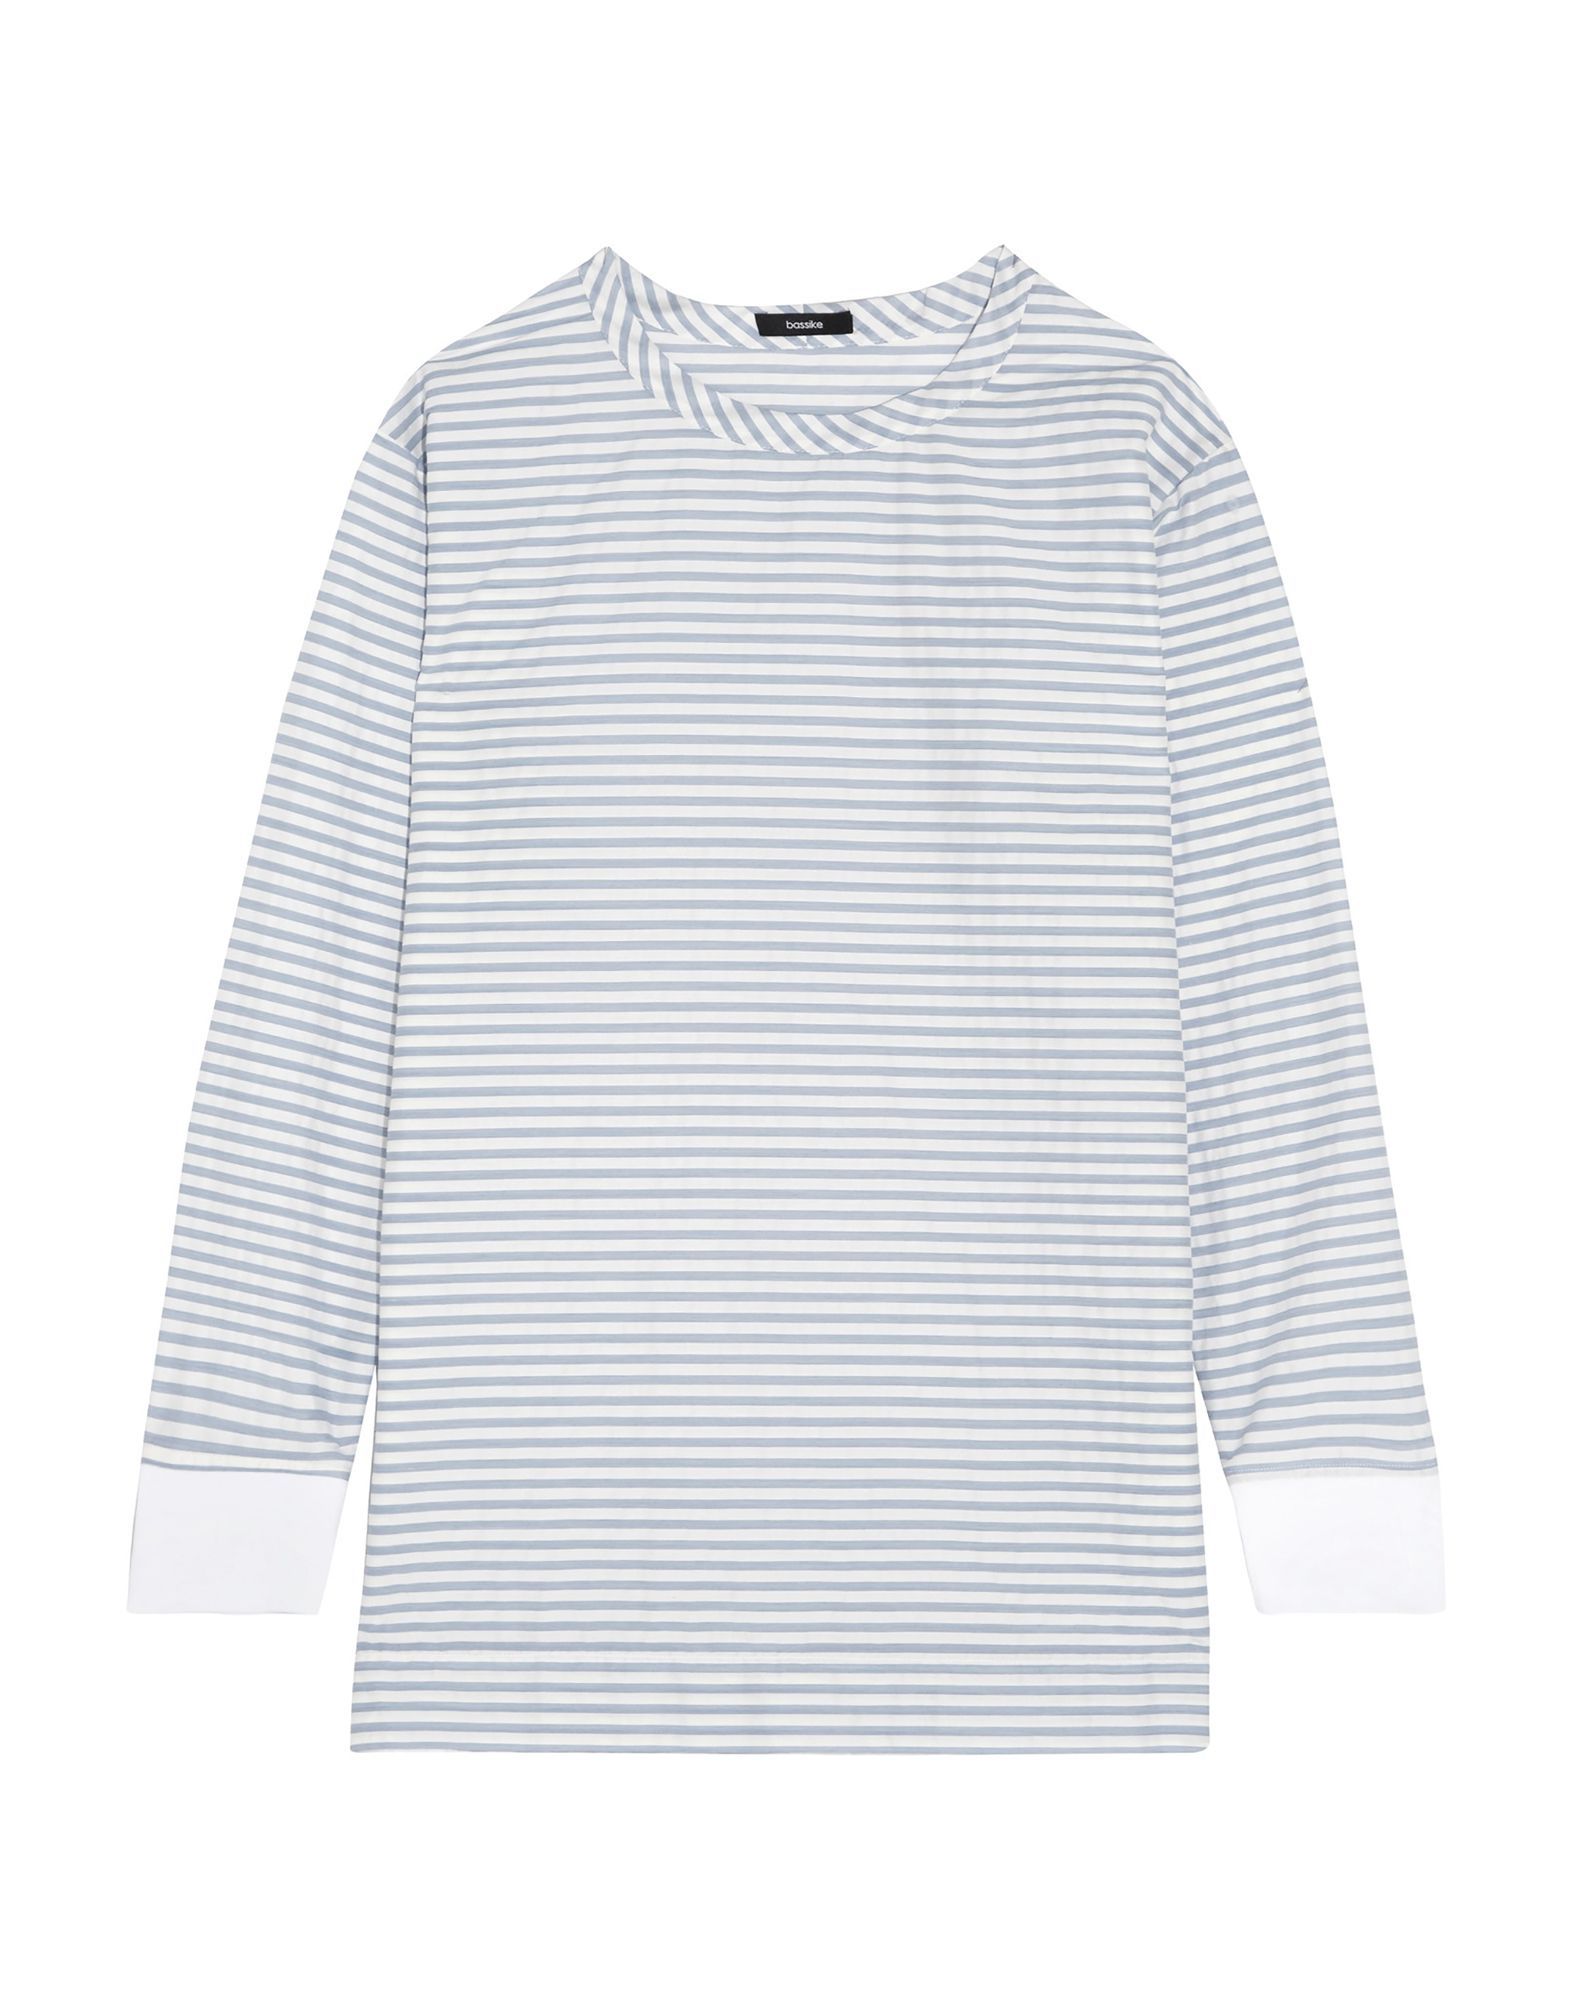 plain weave, no appliqués, stripes, long sleeves, no pockets, round collar, side slit hemline